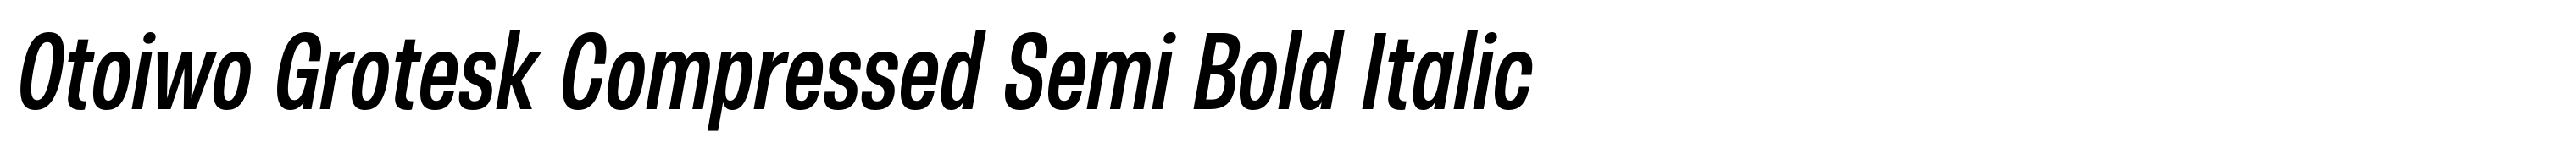 Otoiwo Grotesk Compressed Semi Bold Italic